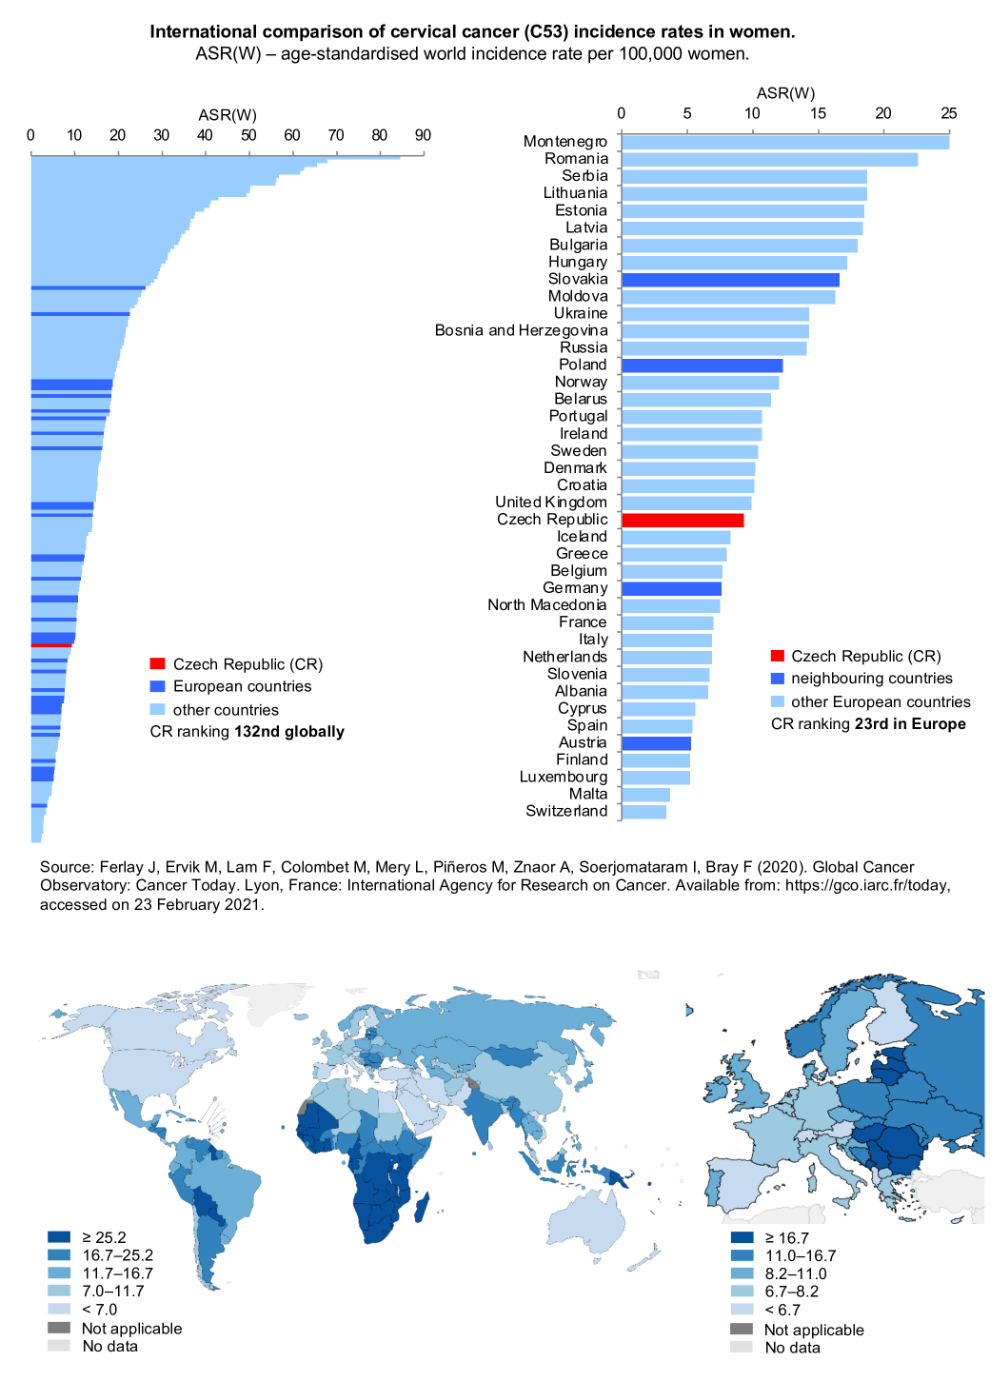 Figure 3: International comparison of cervical cancer (C53) incidence rates. ASR(W) – age-standardised world incidence rate per 100,000 women. Source: GLOBOCAN 2018